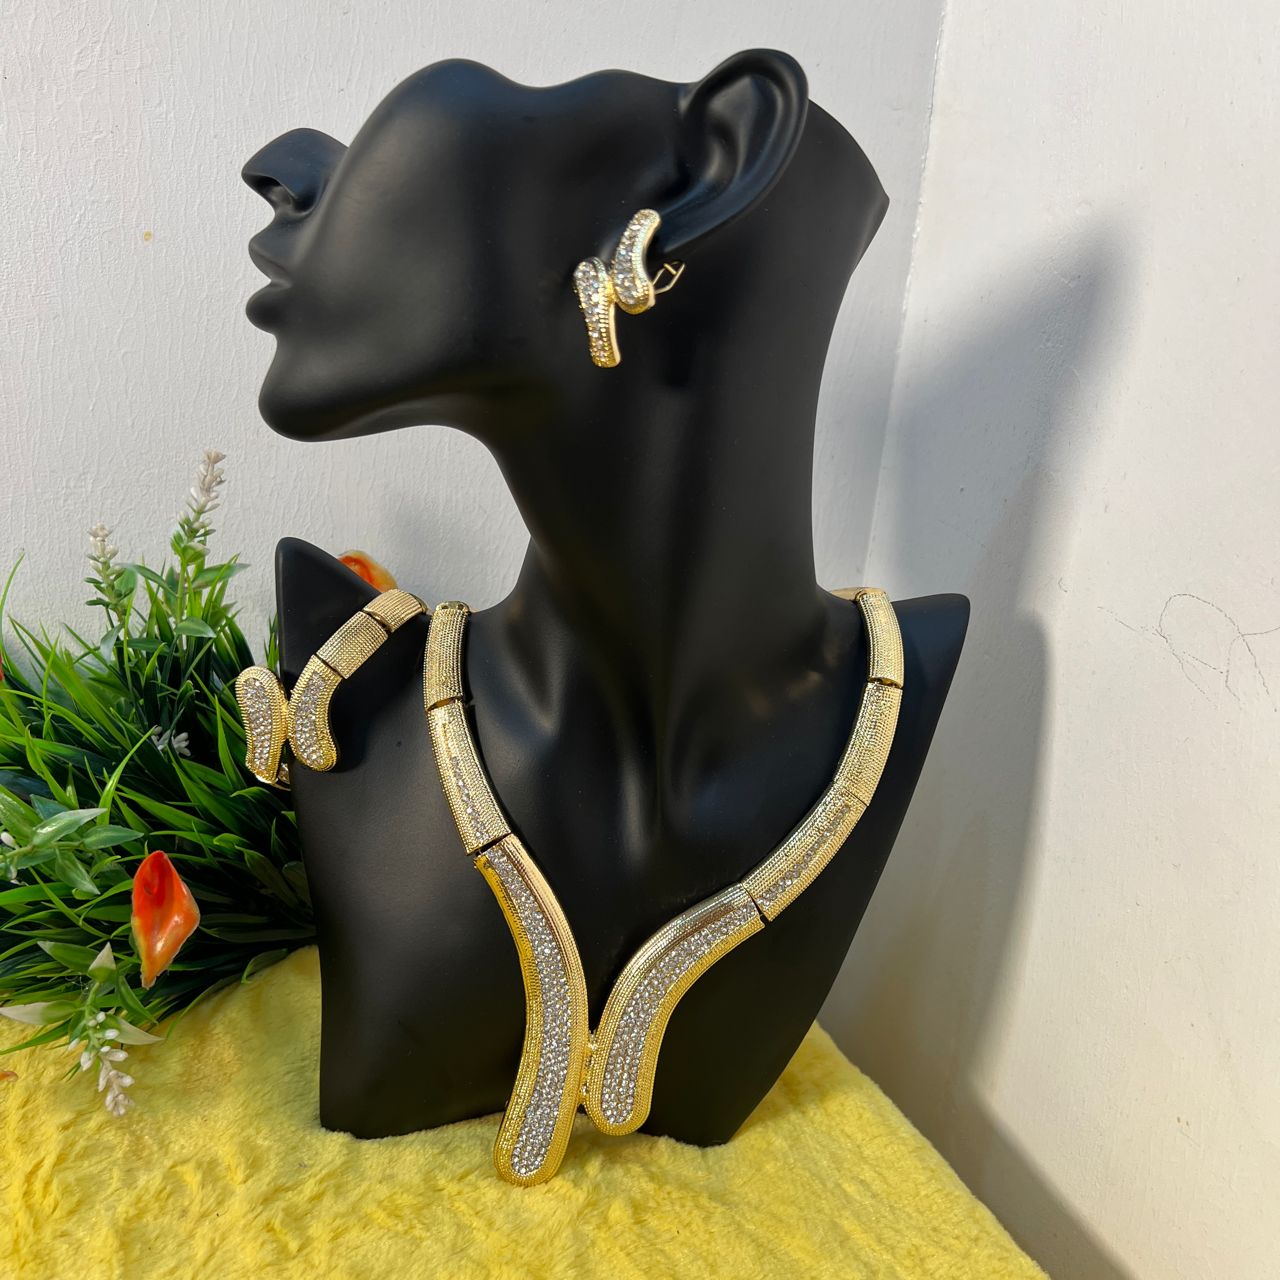 Grace necklace set (necklace, bracelet, earrings)